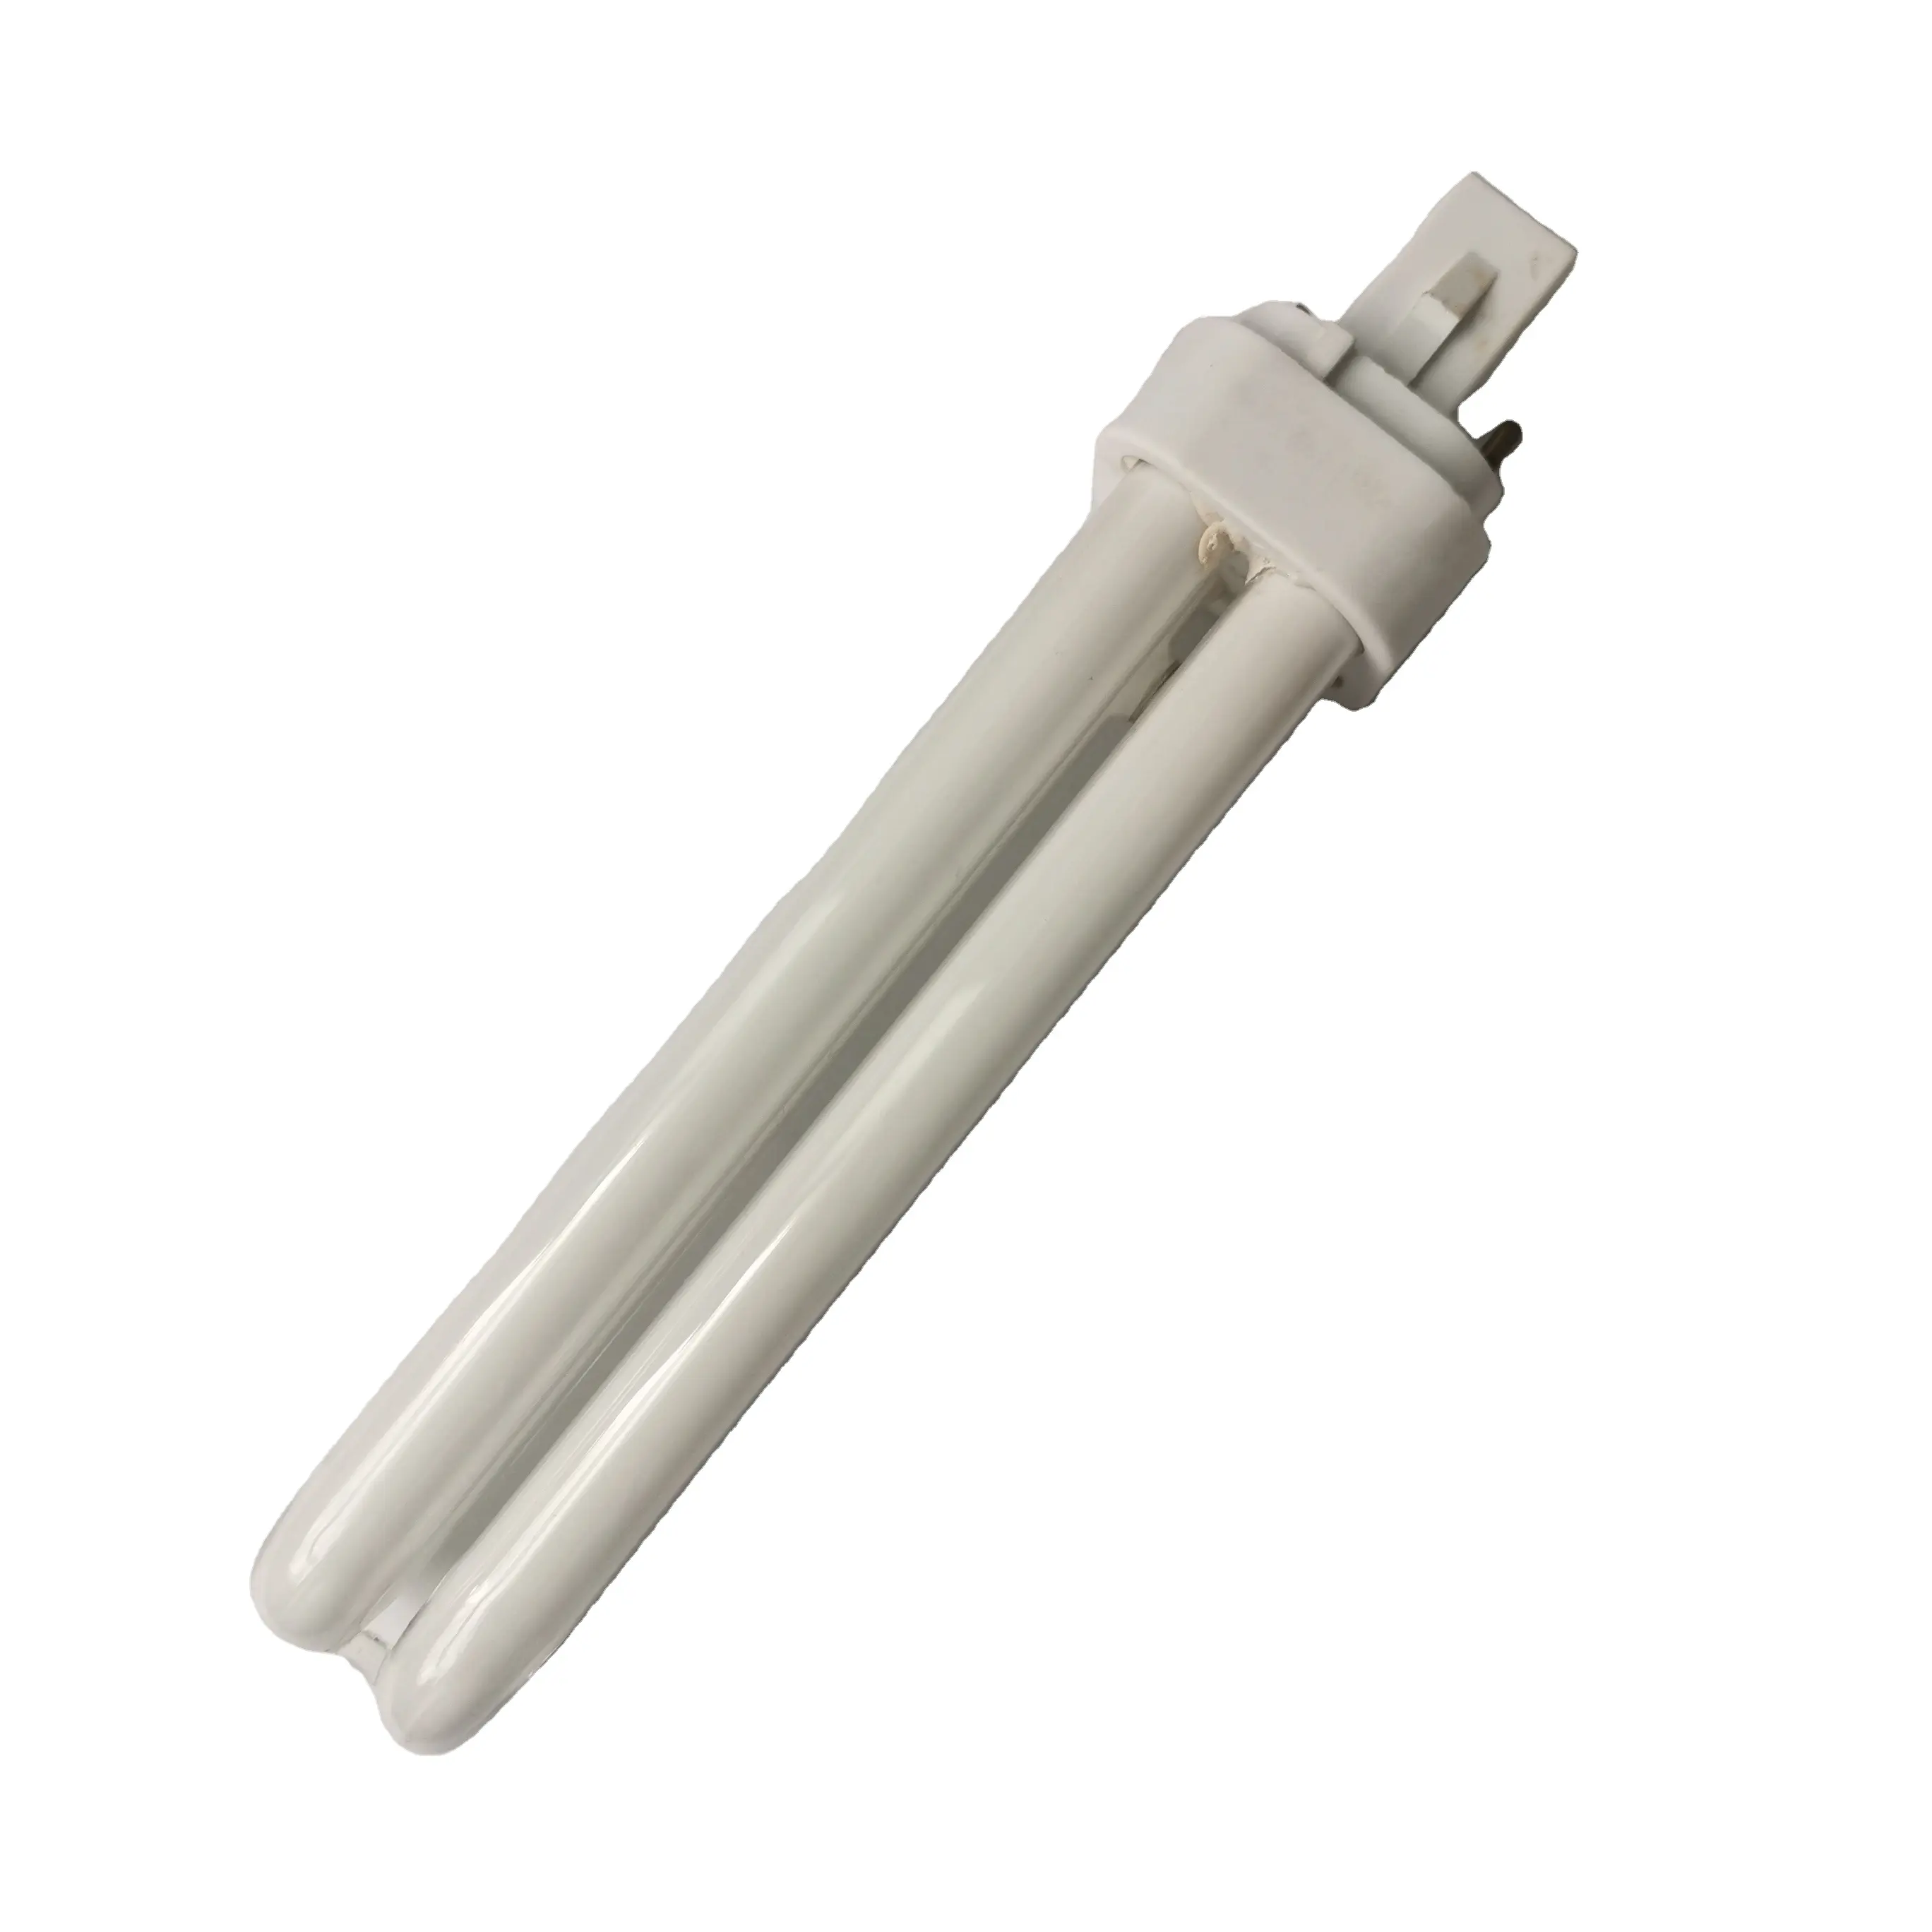 2PIN 4PIN compact energy-saving lamp G24q G24d 9W 18W 26W fluorescent lamp tube